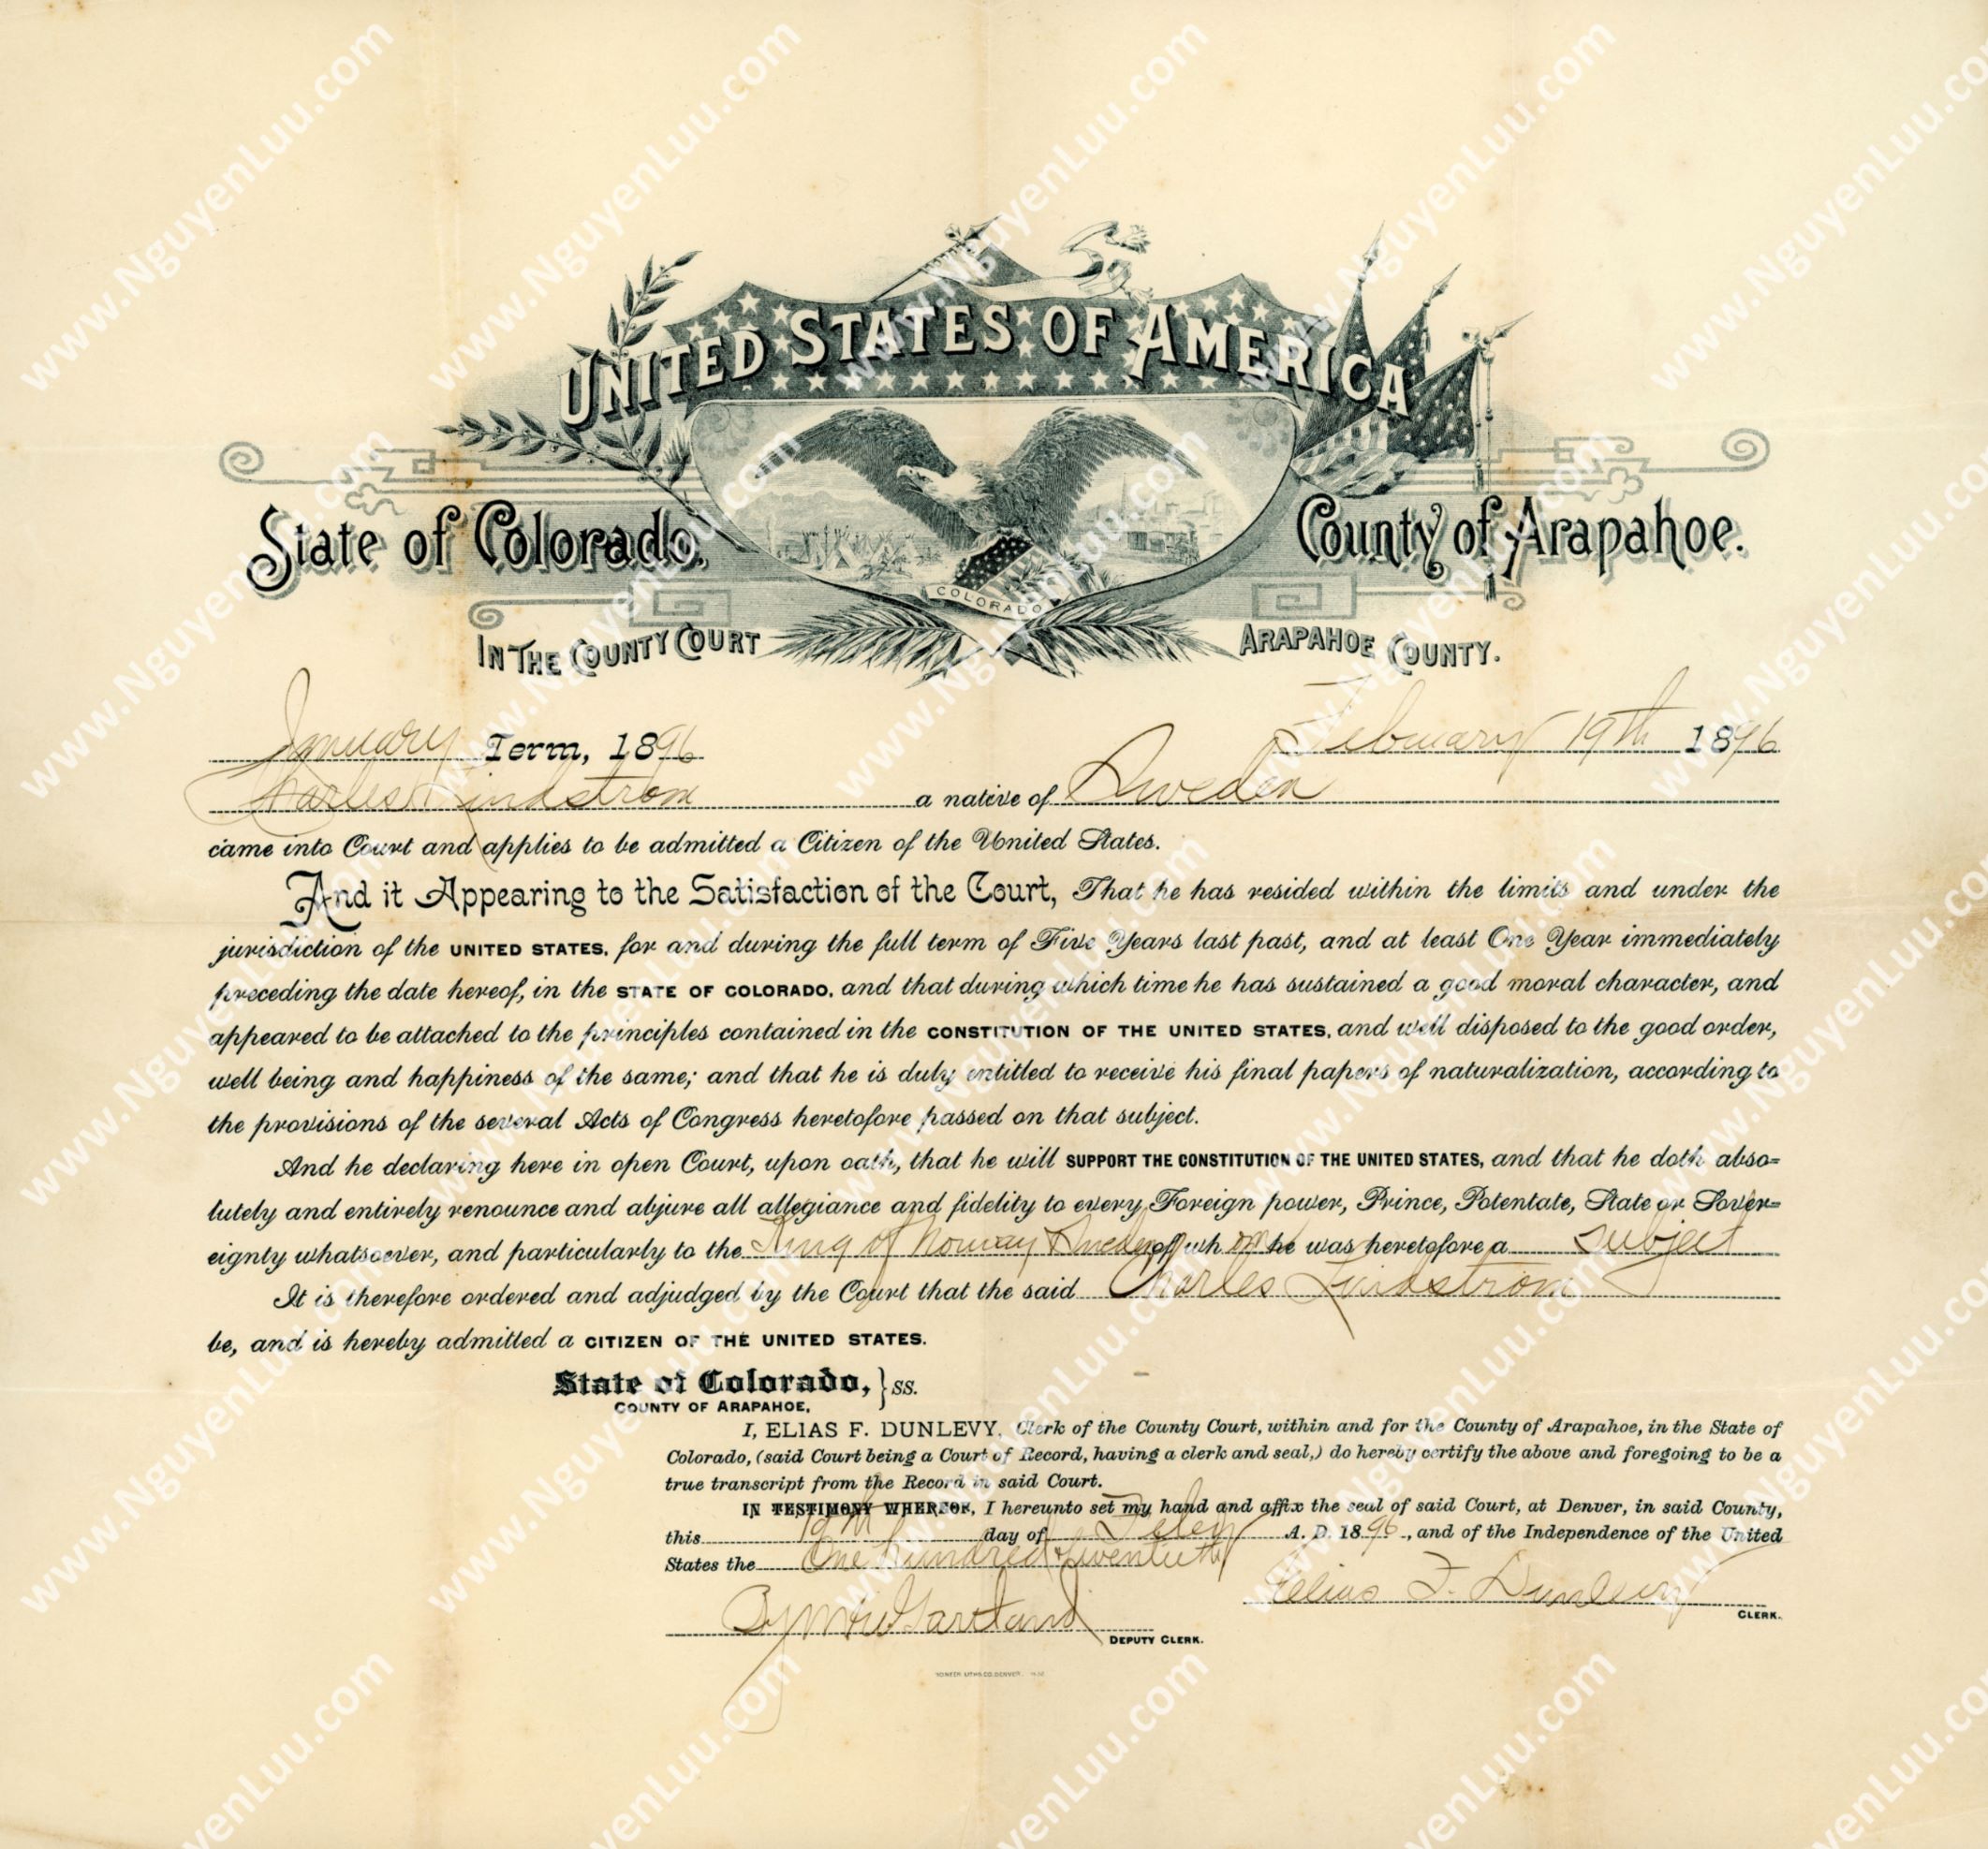 U.S. Certificate of Naturalization issued in State of Colorado in 1896